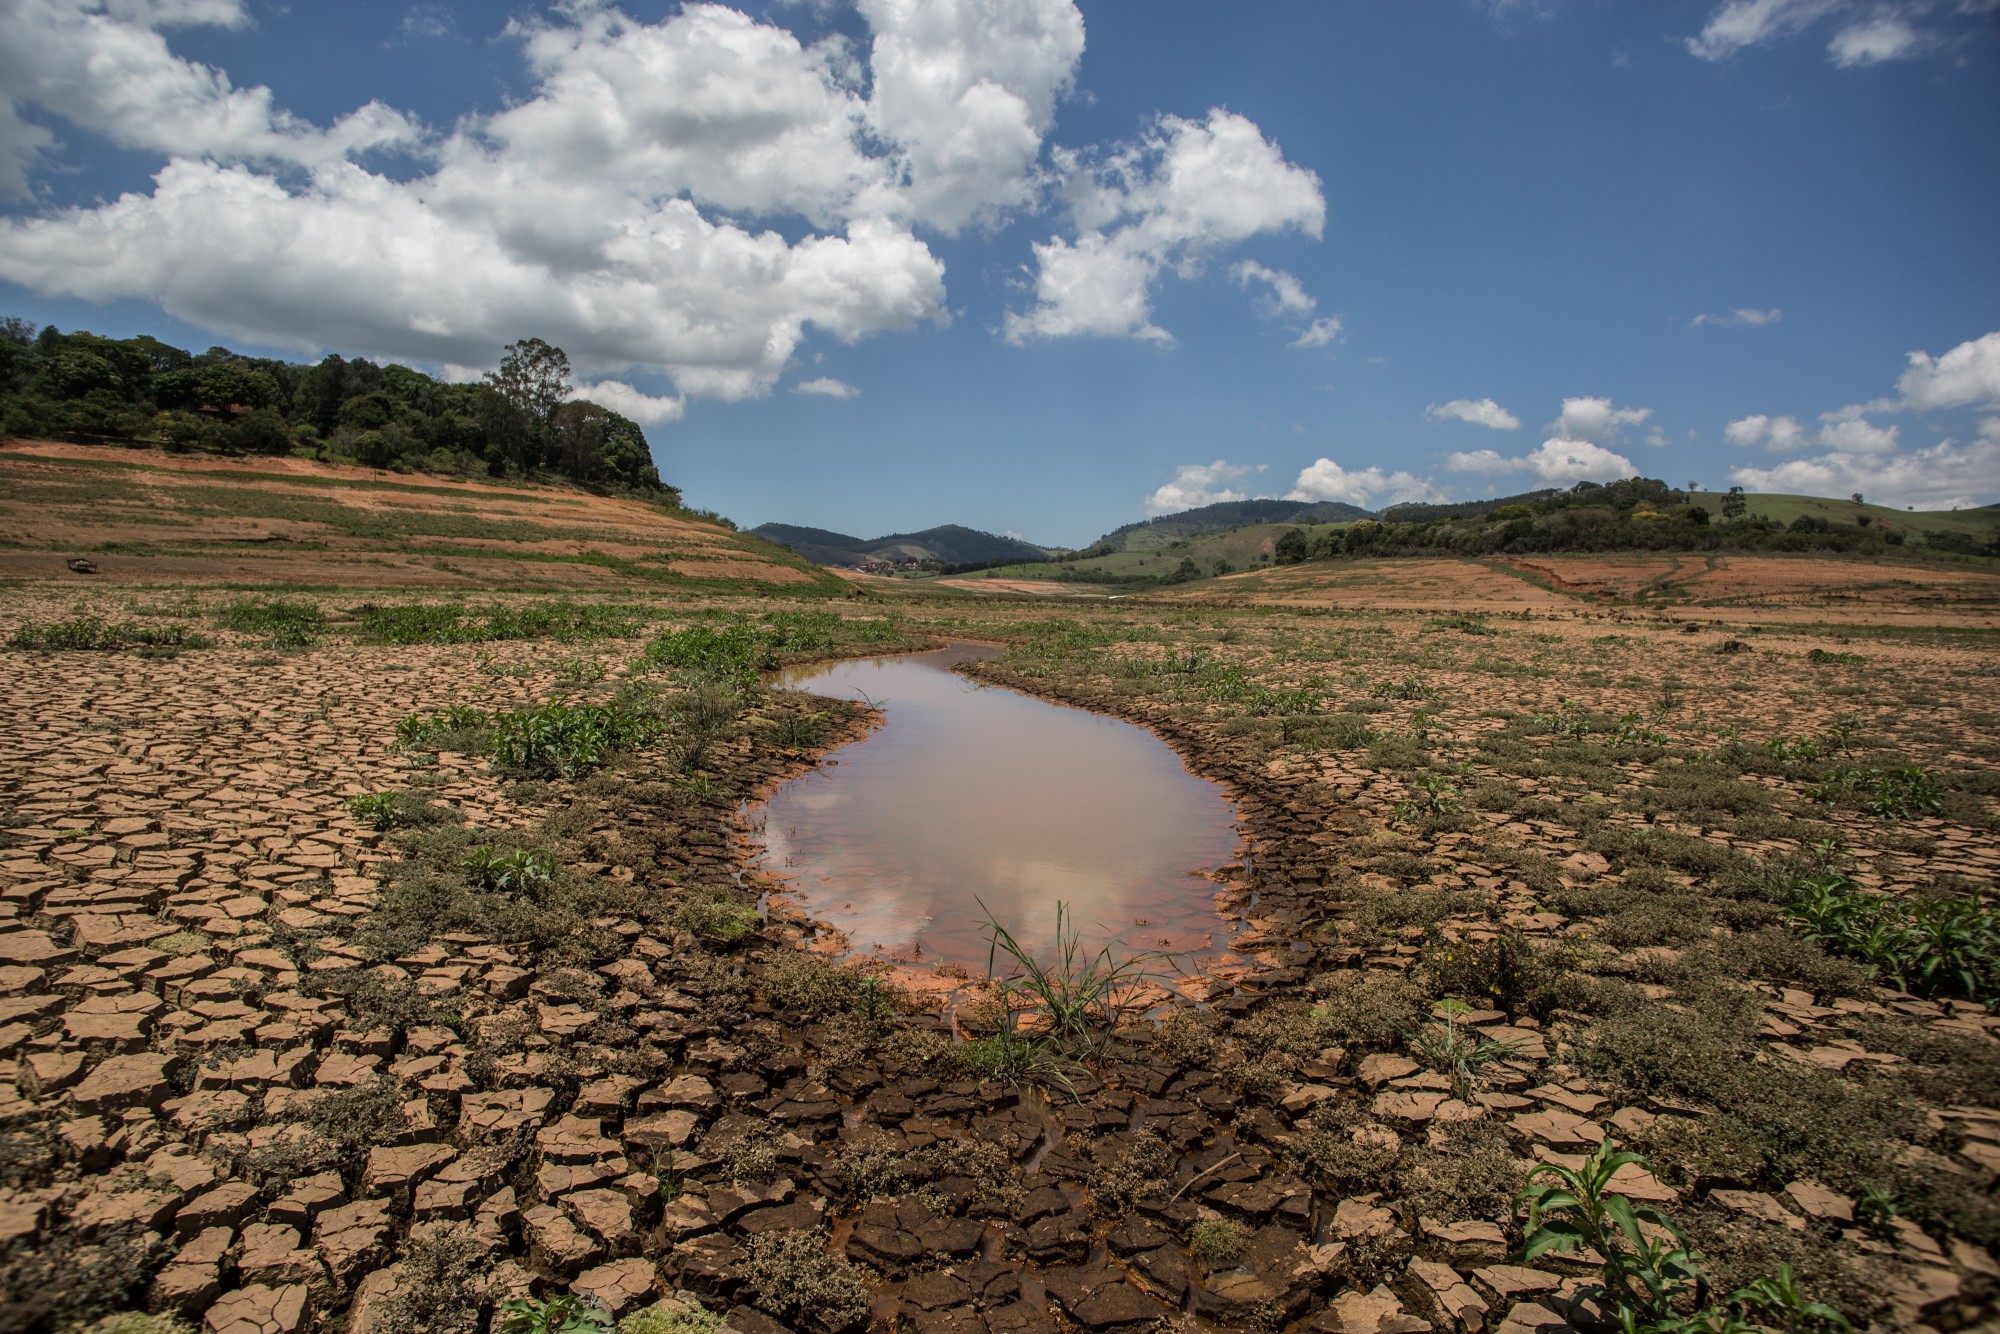 Rio de Janeiro’s Water Reservoirs Critically Low Again